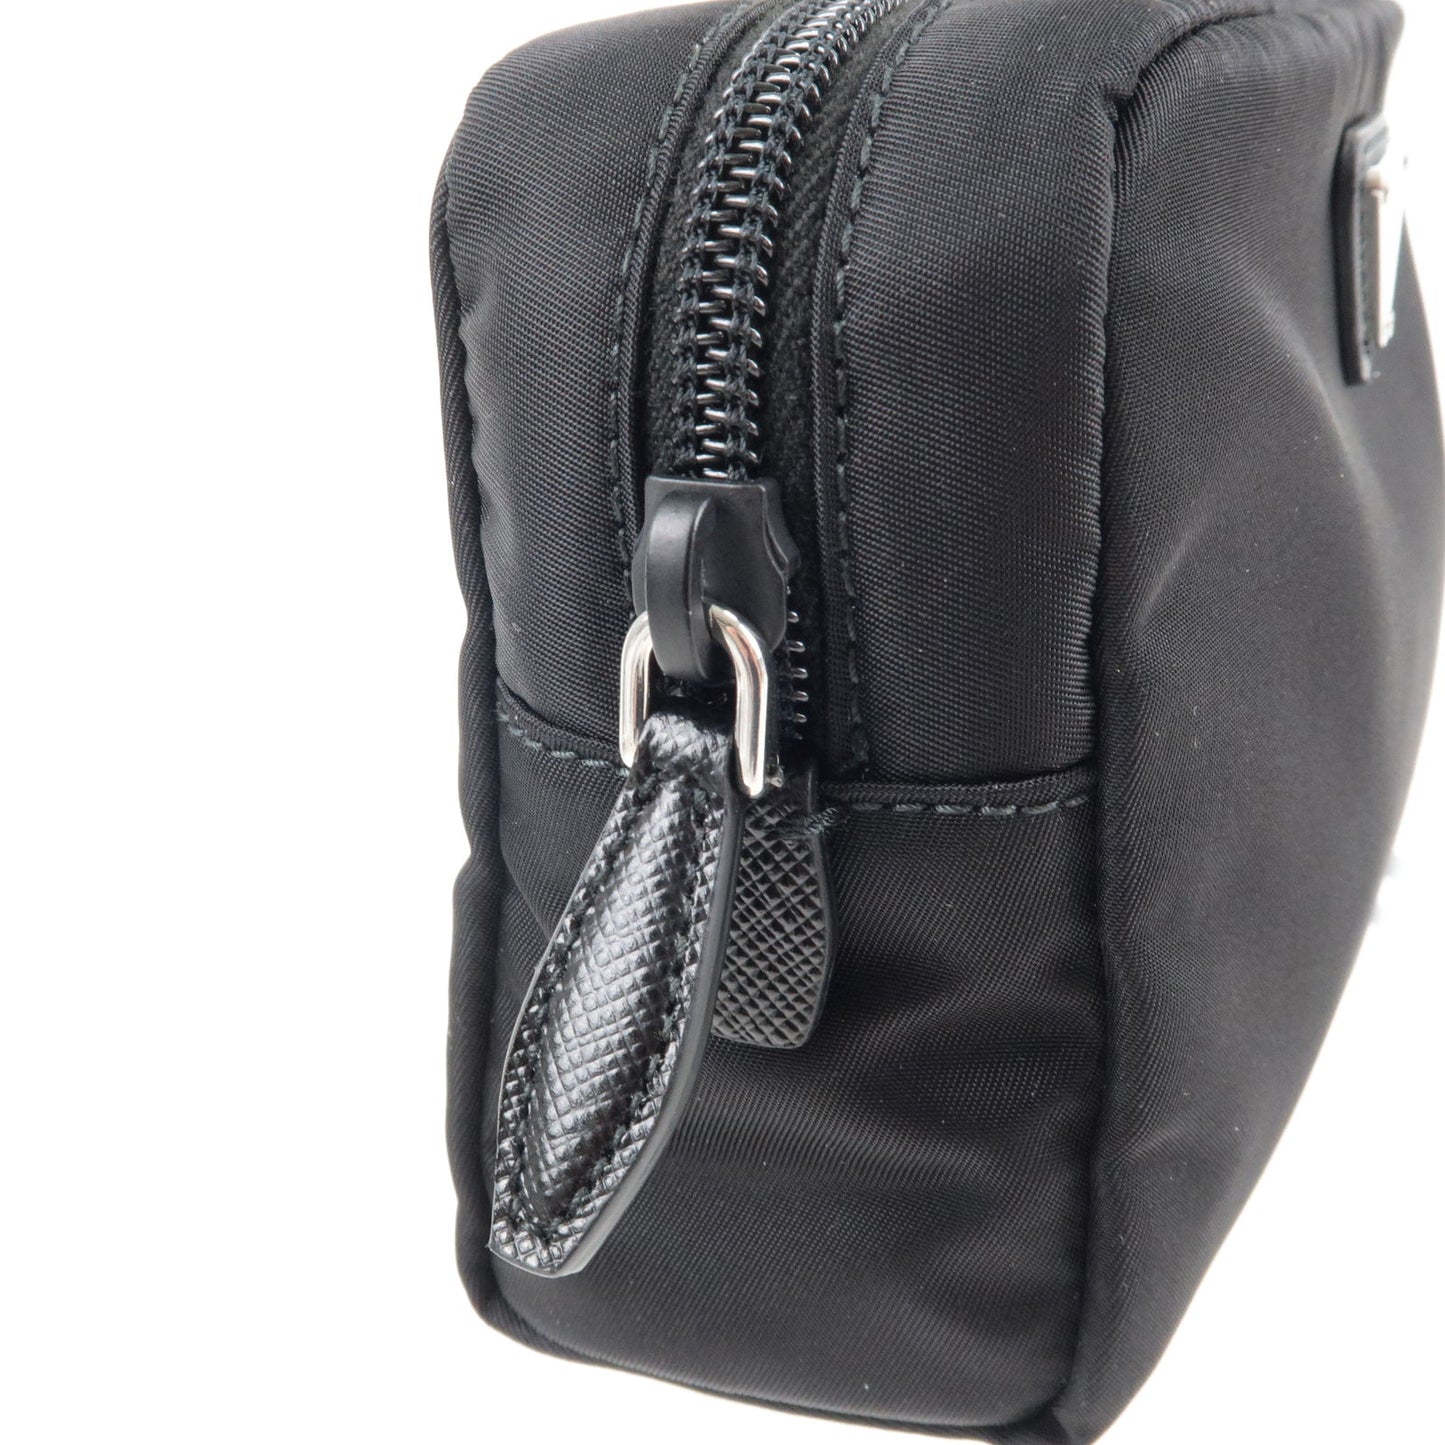 PRADA Logo Nylon Leather Pouch Clutch Bag NERO Black 1NE021